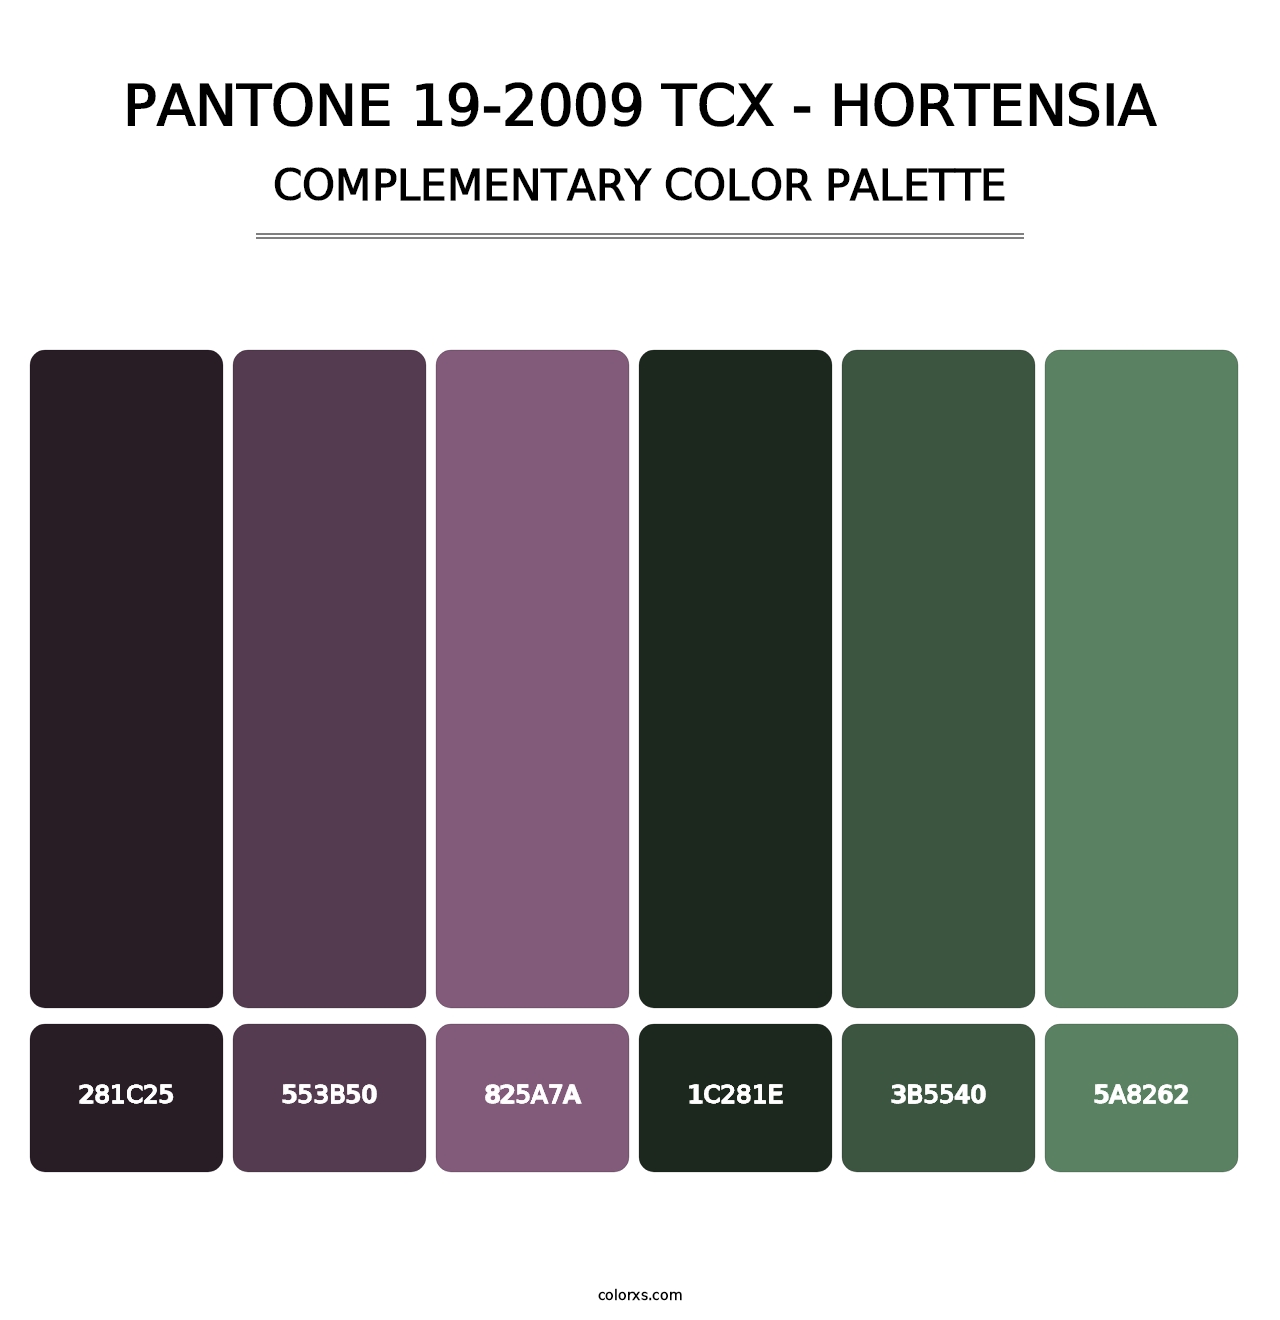 PANTONE 19-2009 TCX - Hortensia - Complementary Color Palette